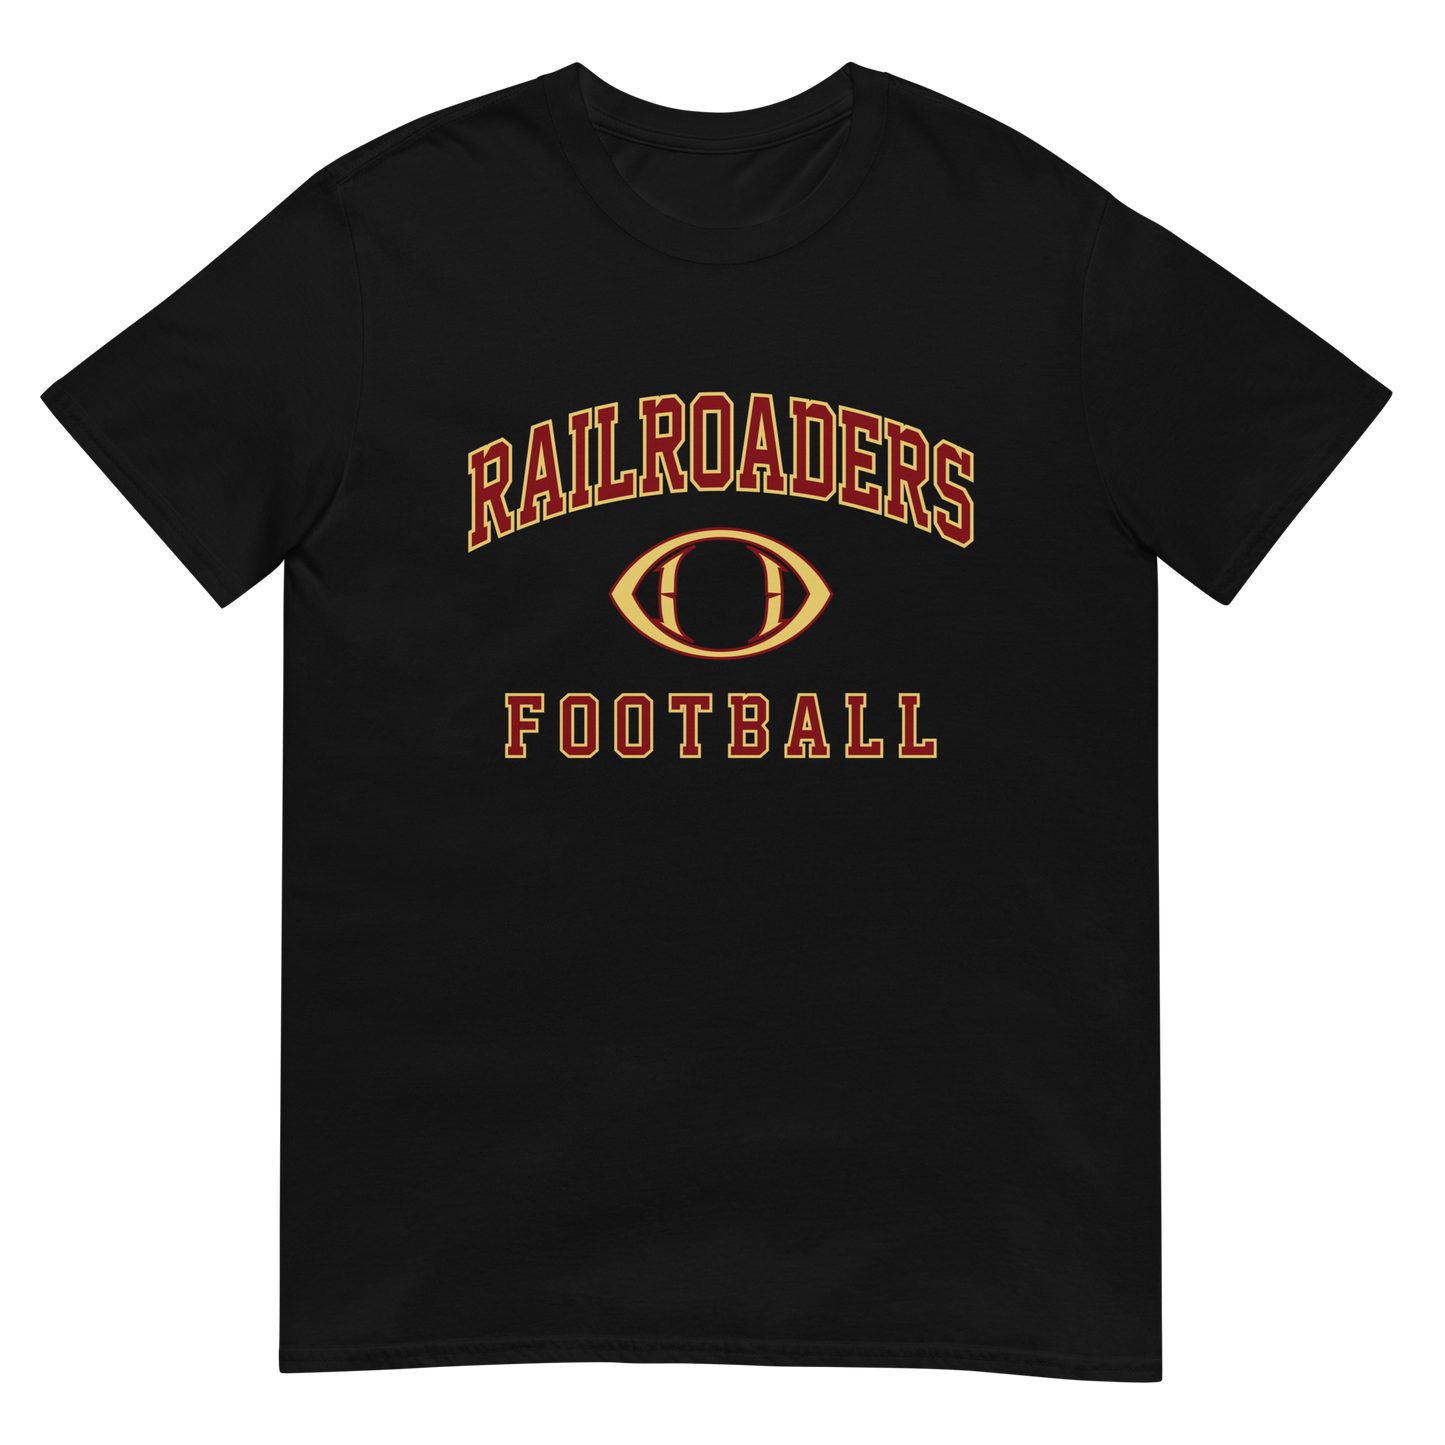 Railroaders Football Short-Sleeve Unisex T-Shirt